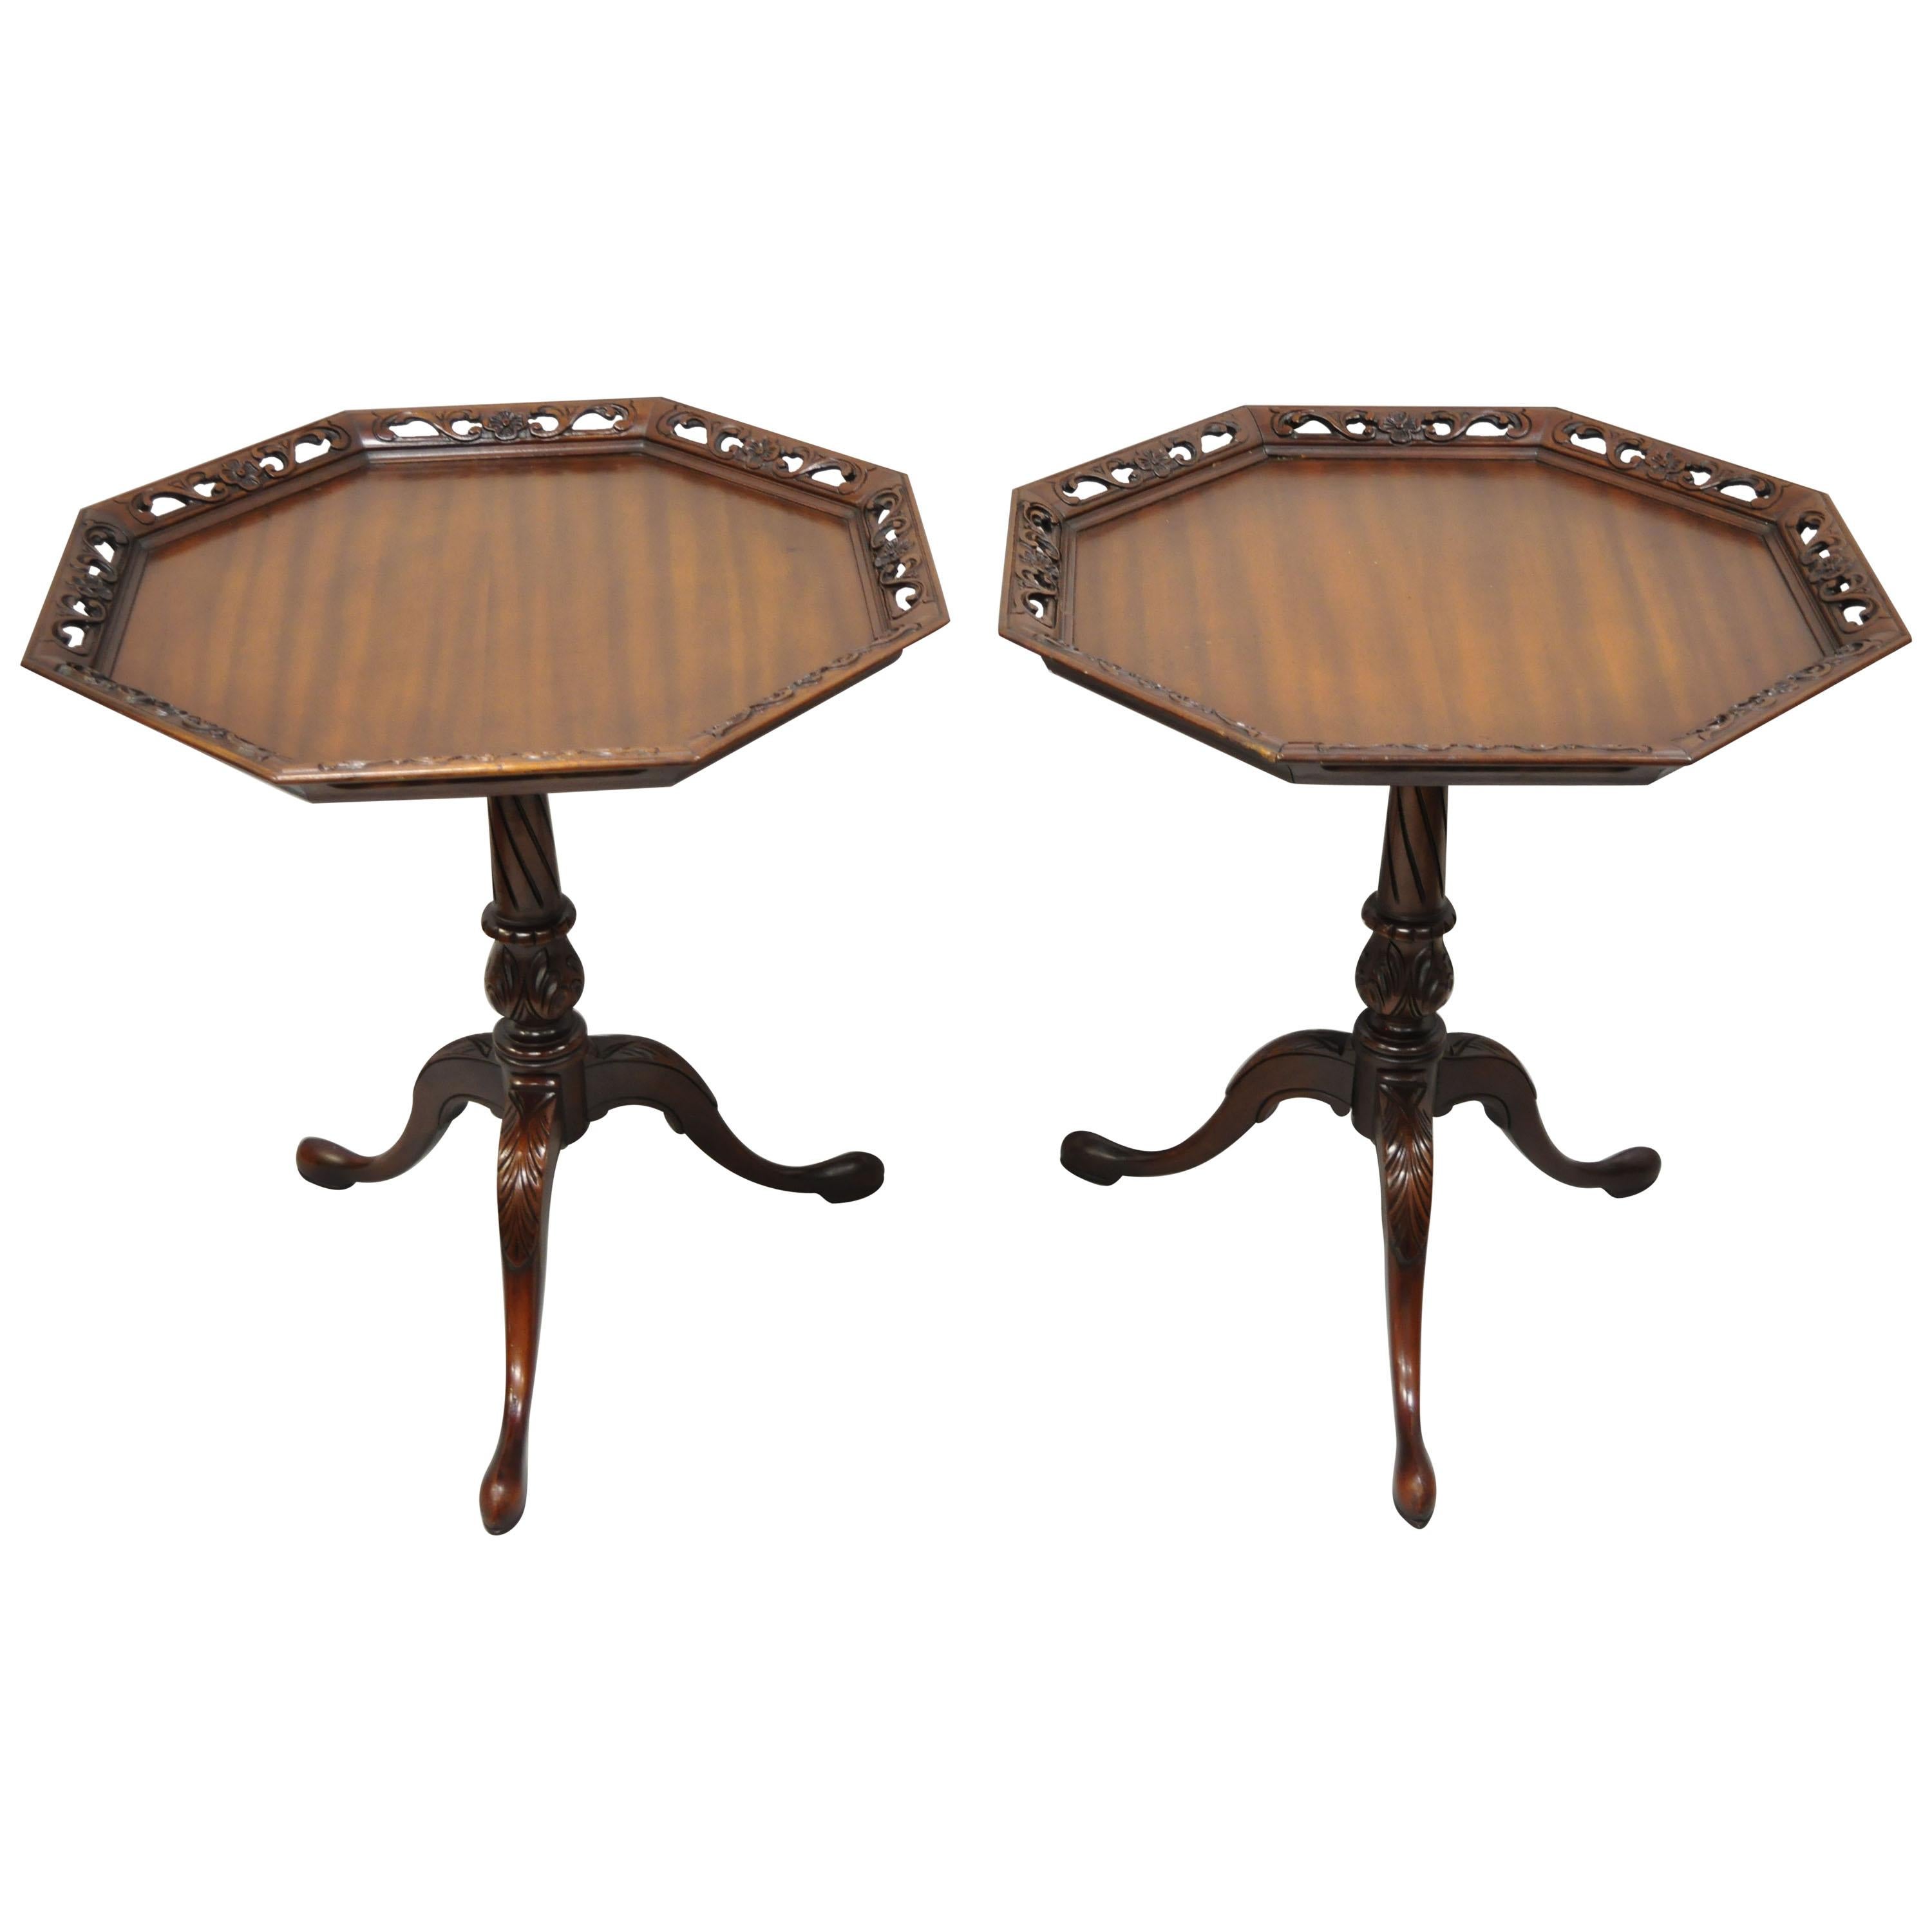 Antique Weiman Heirloom Mahogany Regency Pie Crust Side Lamp Tables, a Pair